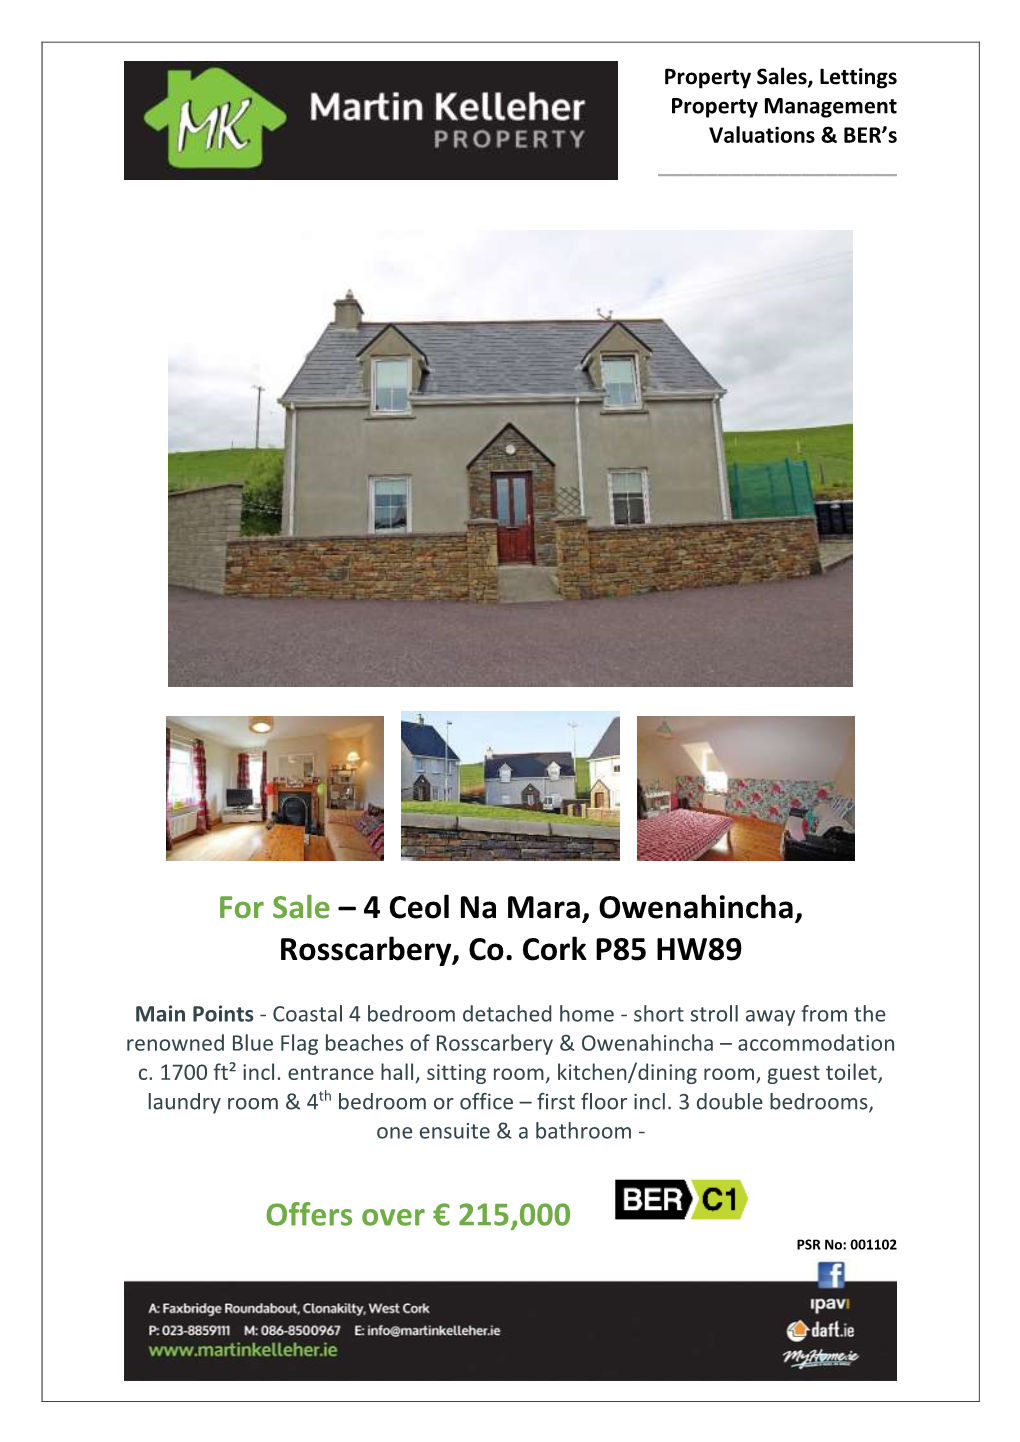 For Sale – 4 Ceol Na Mara, Owenahincha, Rosscarbery, Co. Cork P85 HW89